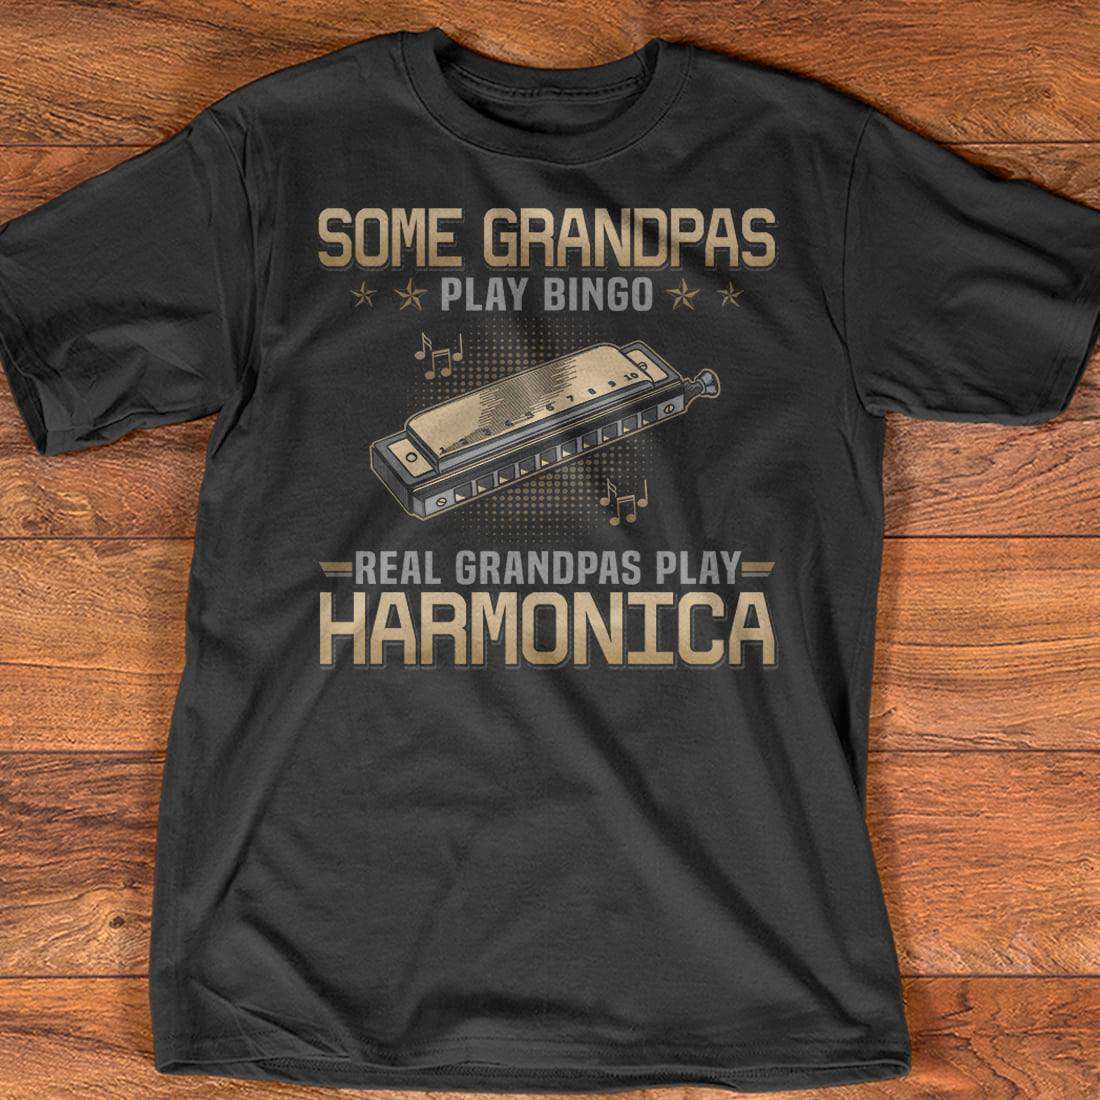 Some grandpas play bingo real grandpas play Harmonica - Harmonica instrument